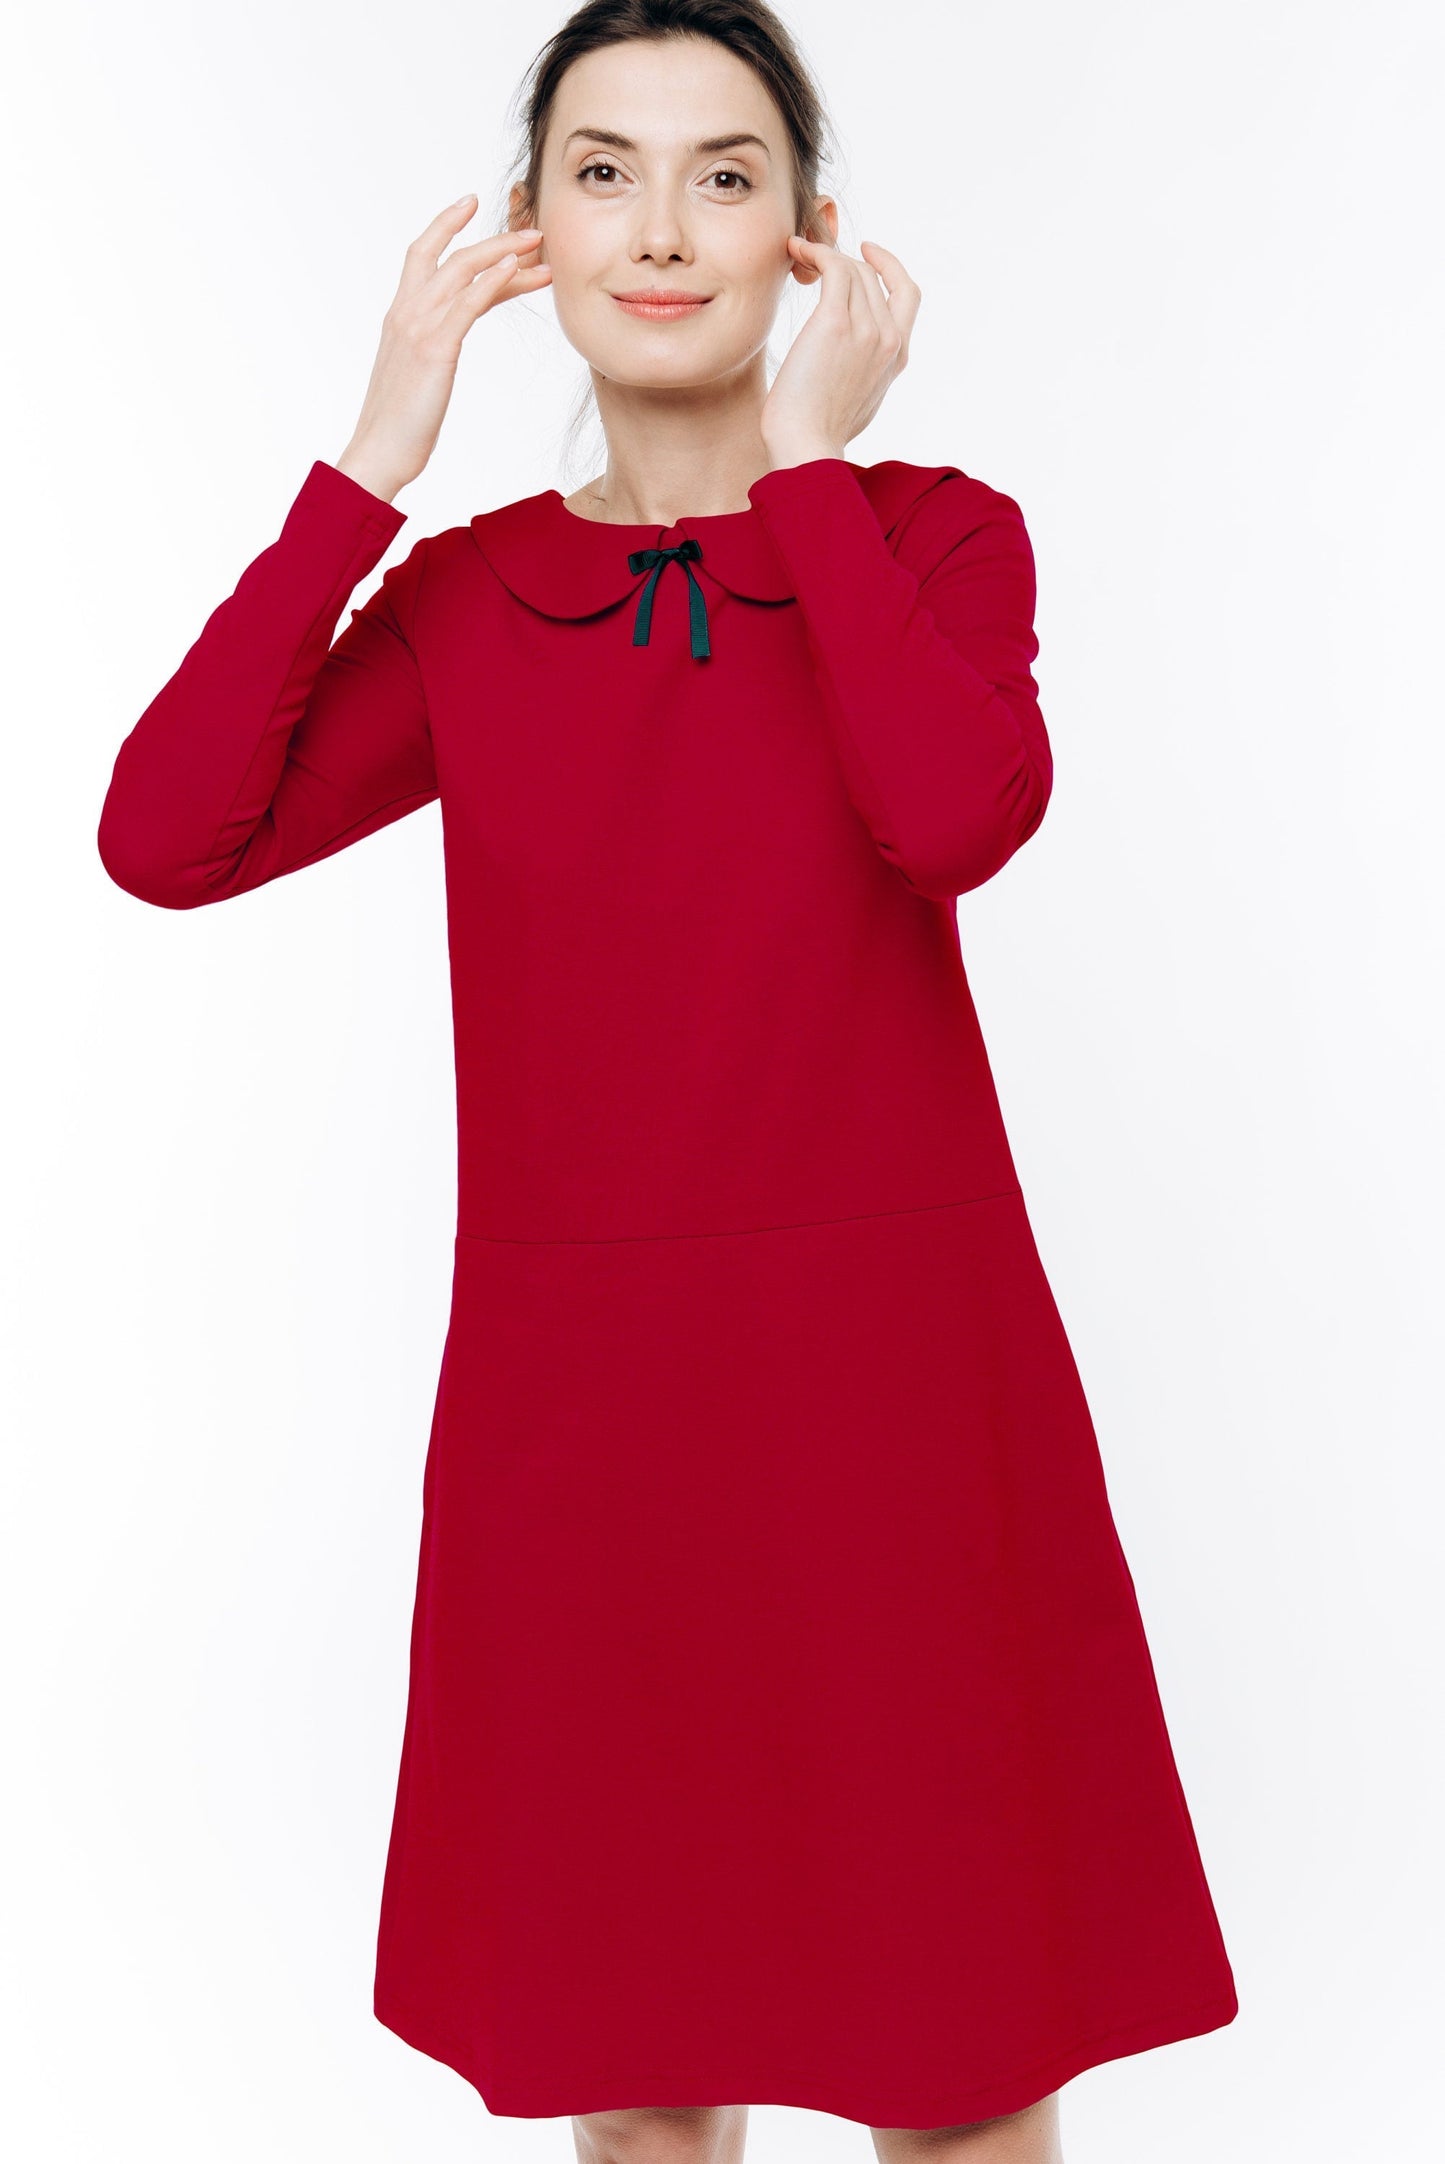 PARISIAN dress, Red, S